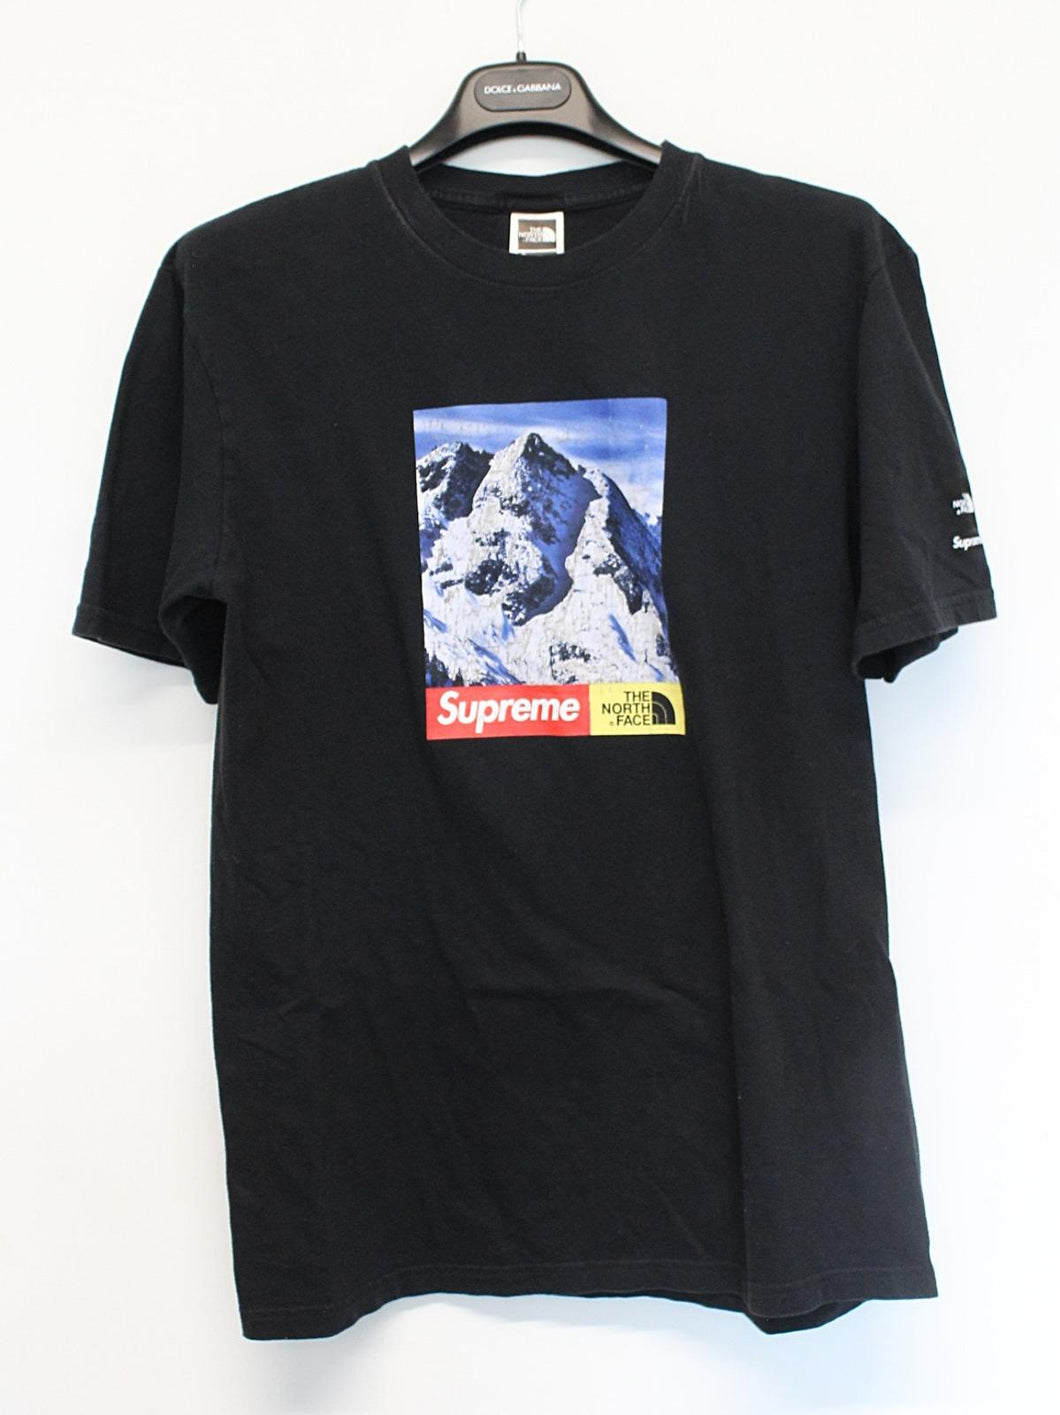 SUPREME x THE NORTH FACE Men's Black Blue Multi Cotton Mountain T-Shirt S